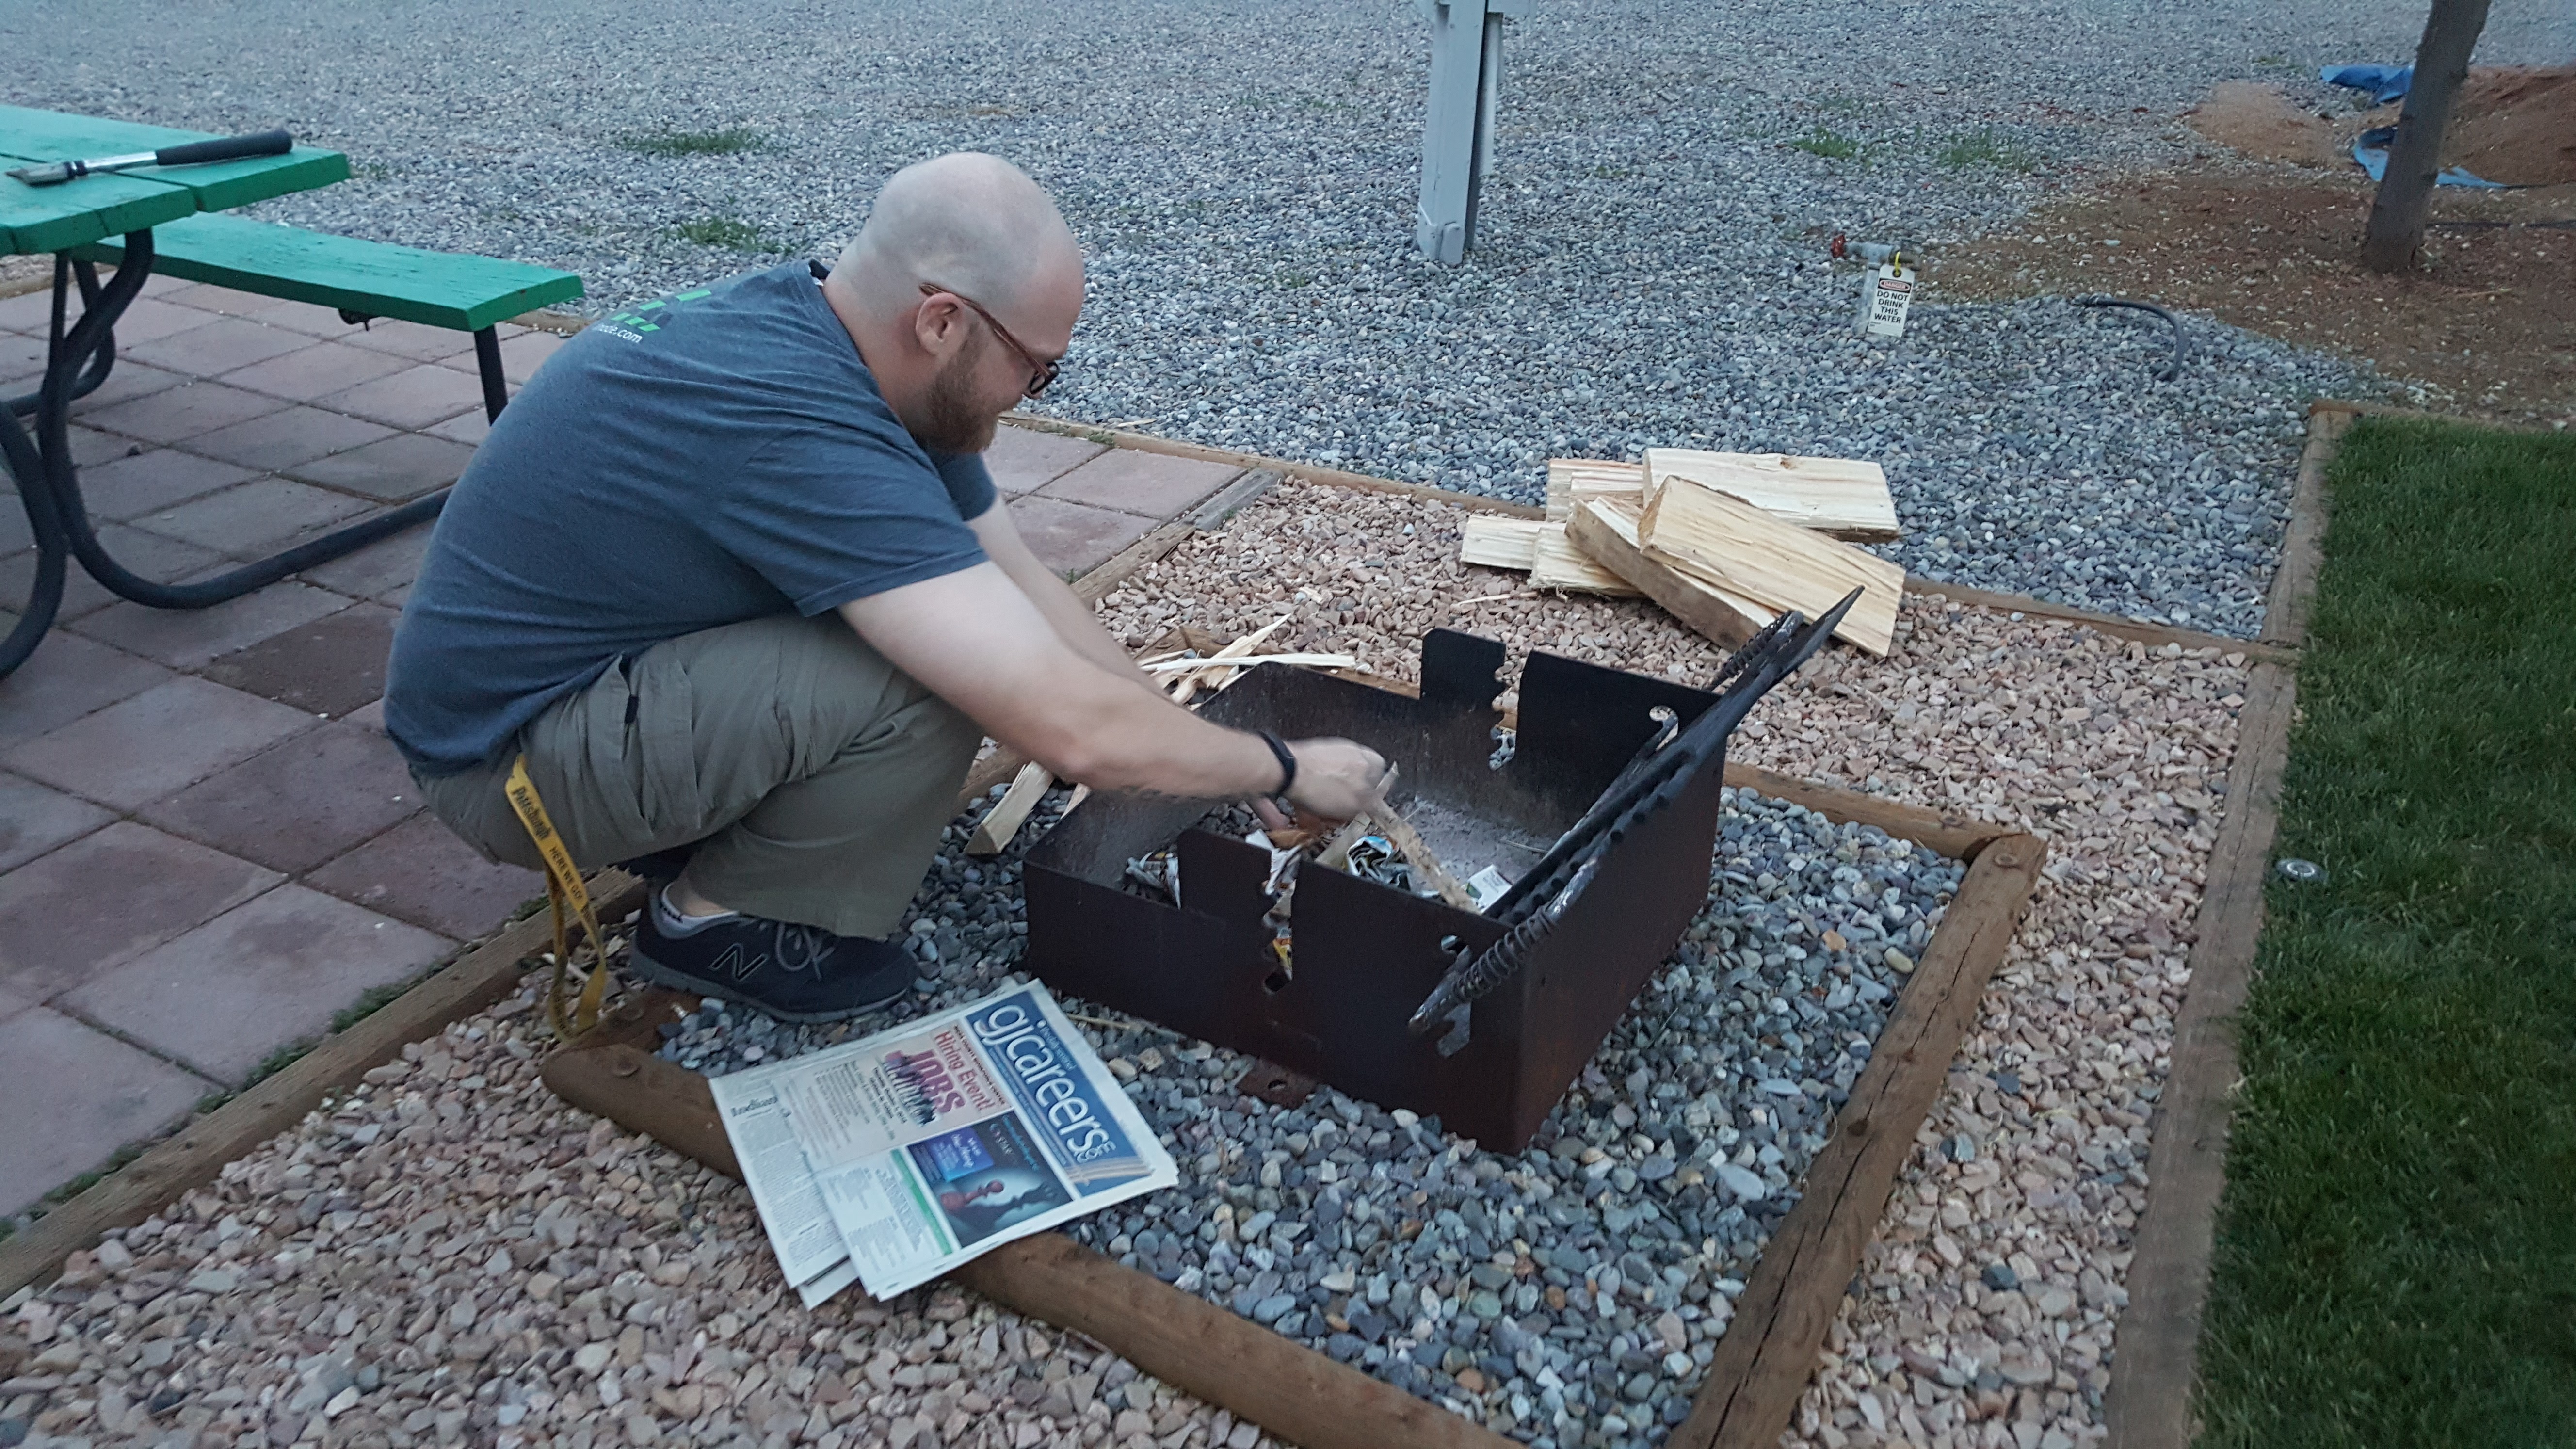 Russ setting up a campfire